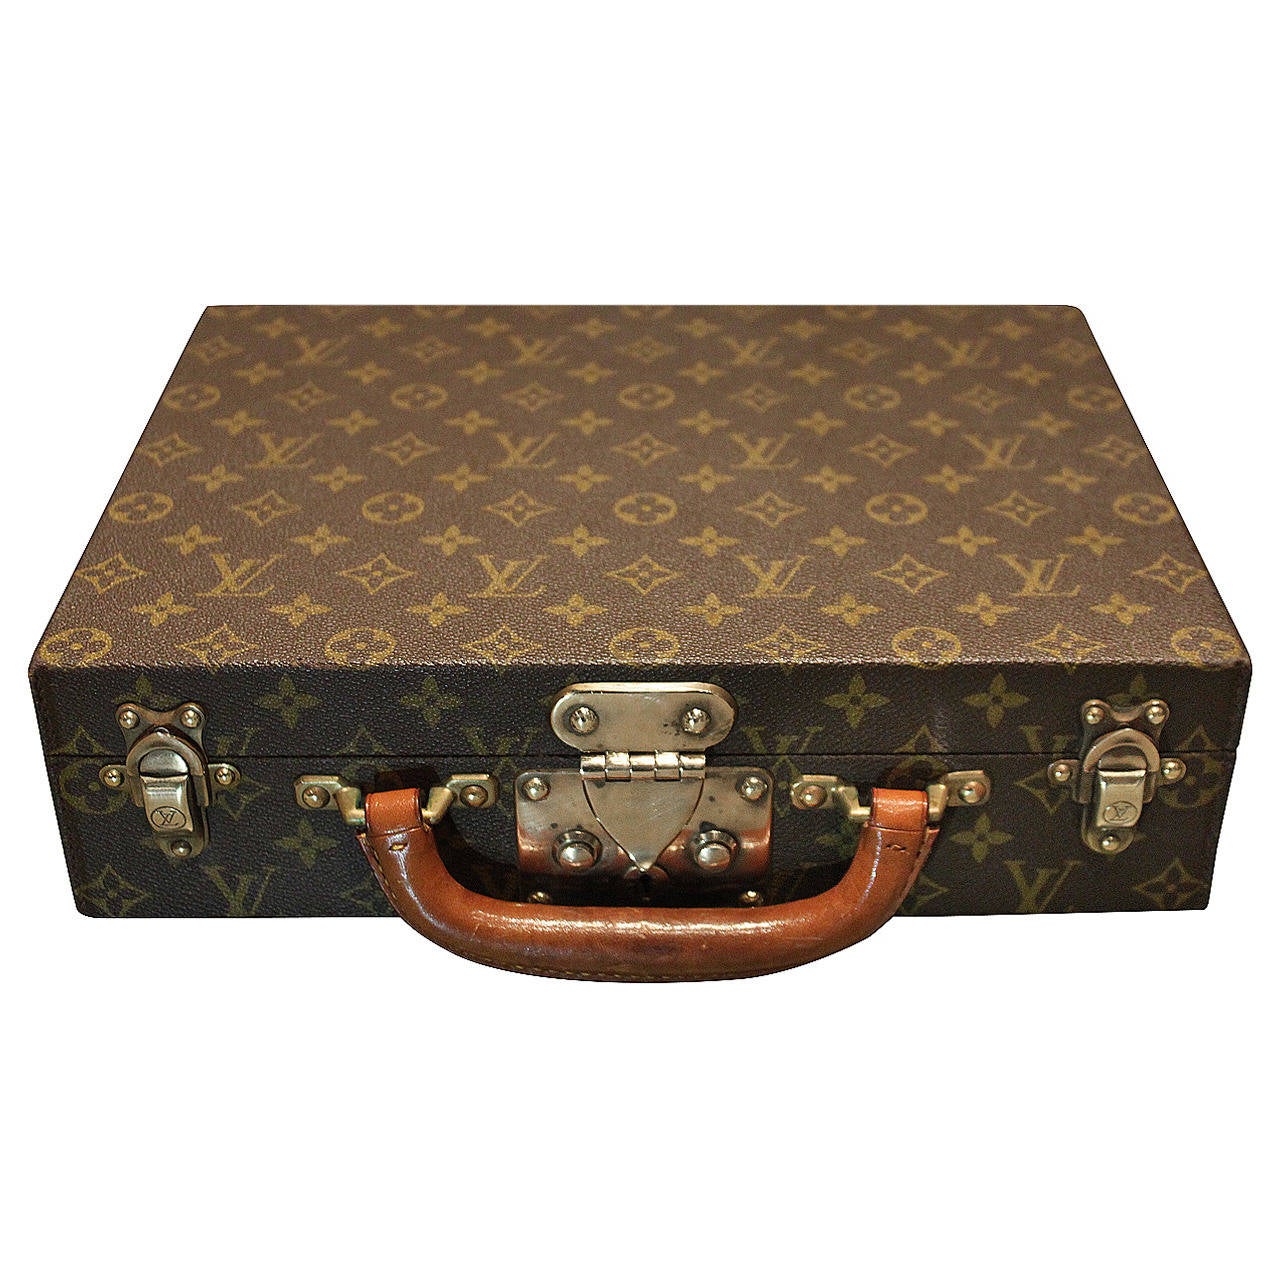 Rare Louis Vuitton Jewelry Box at 1stdibs